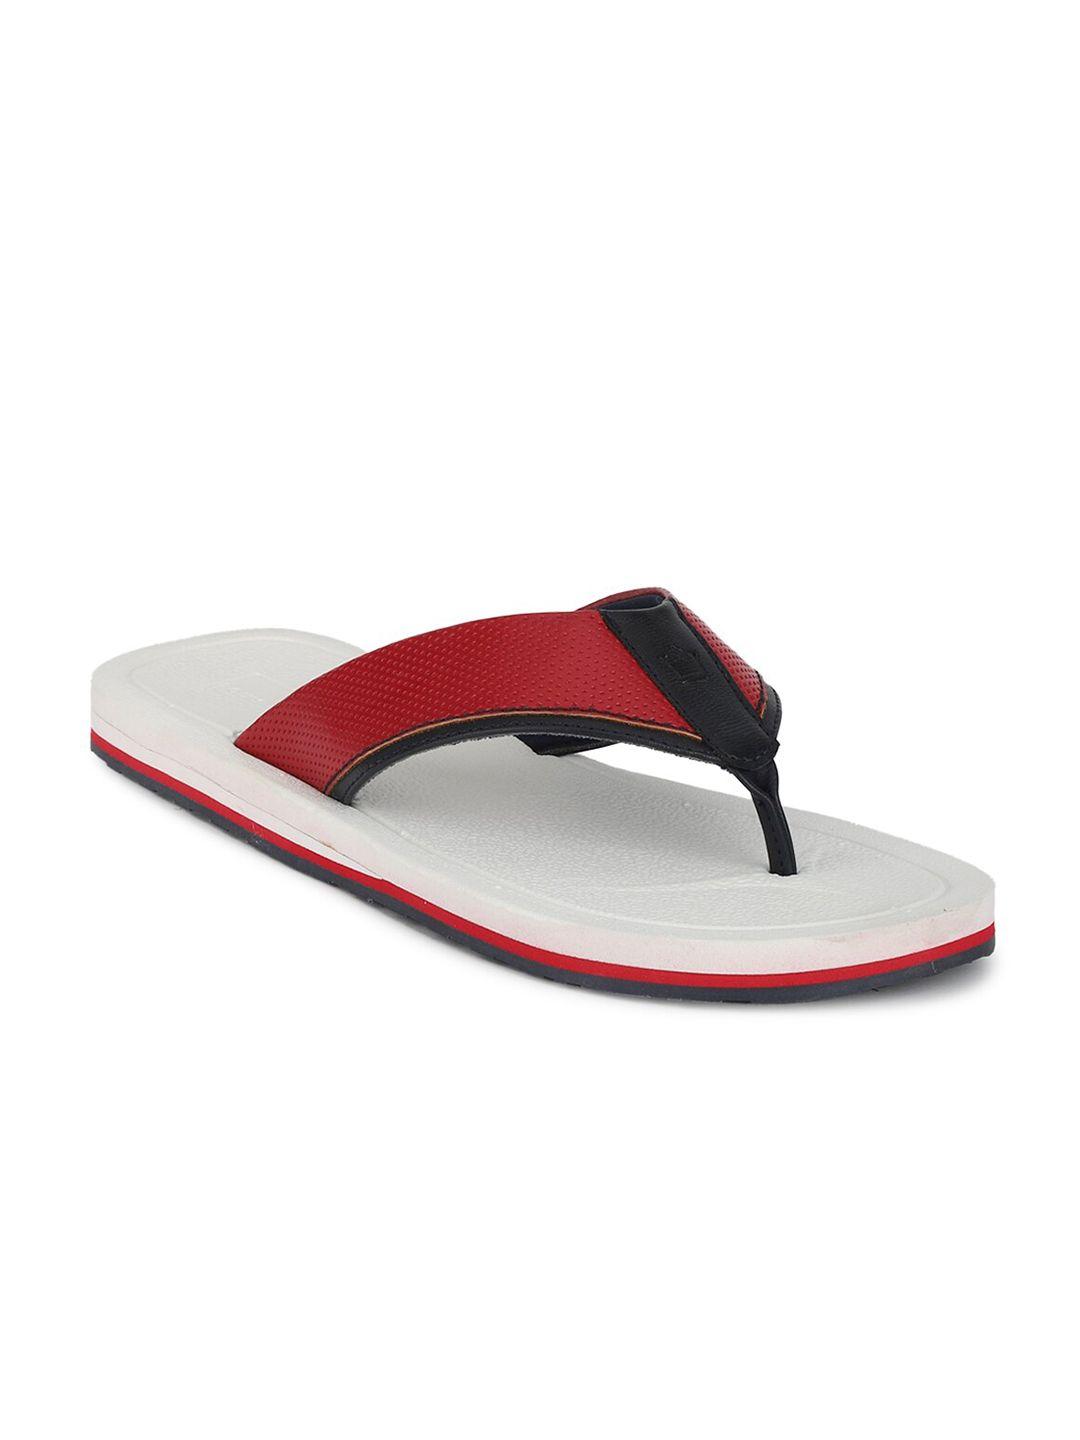 louis philippe men white & red comfort sandals